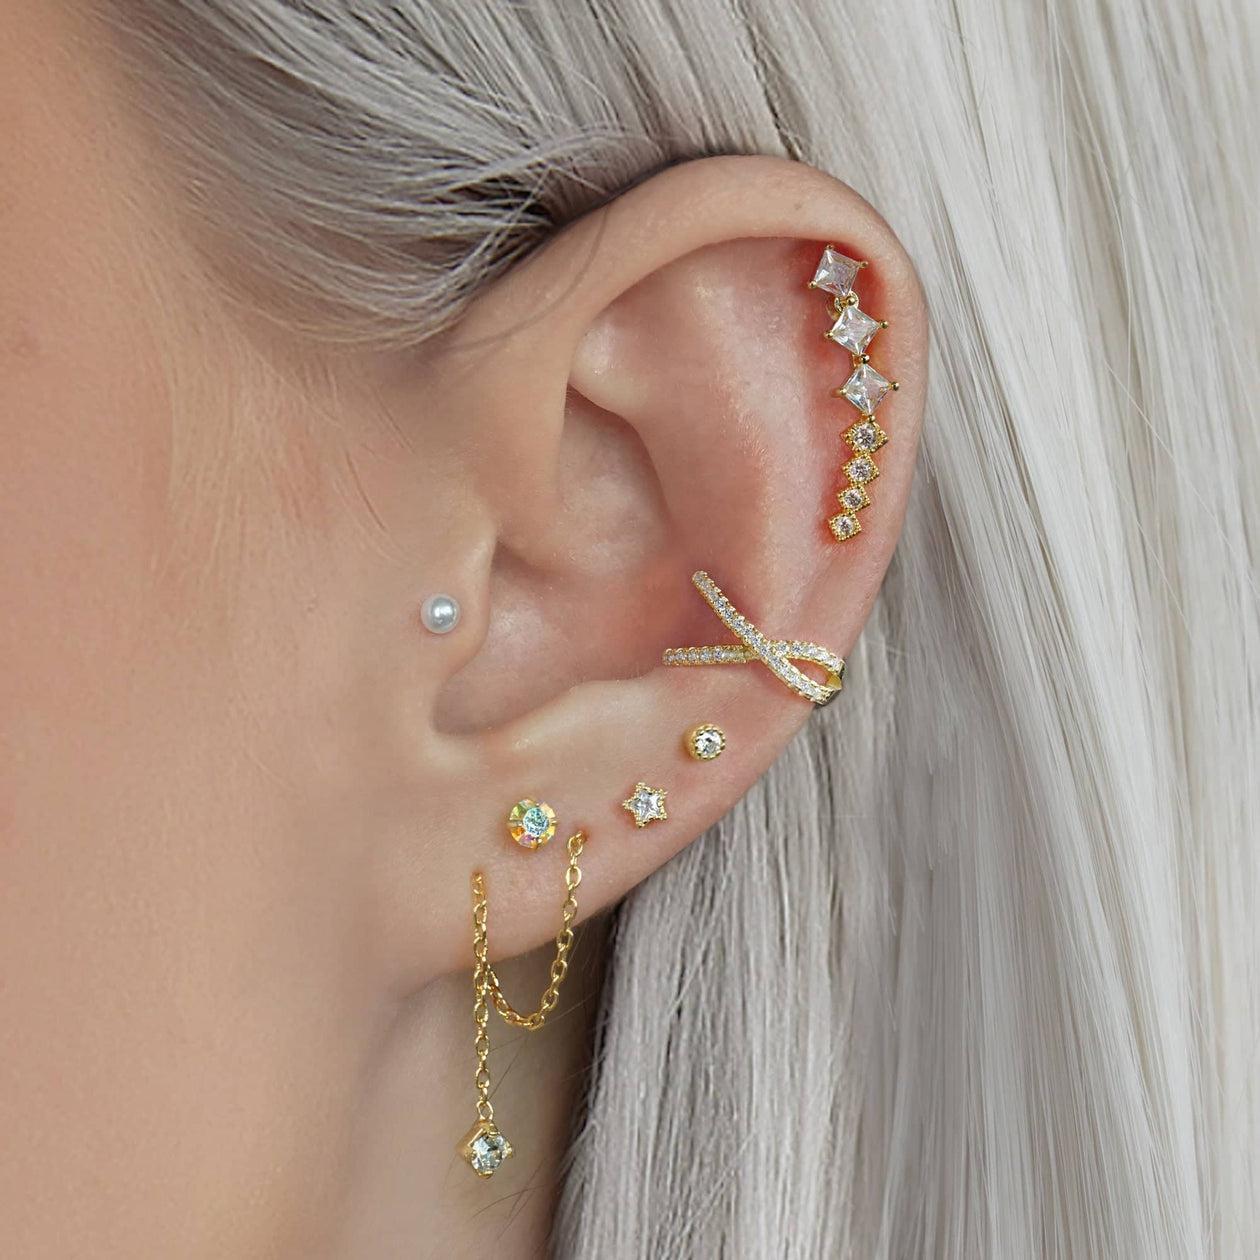 Amazon.com: Double Hoop Twist Earrings for Single Piercing,Silver Double  Huggie Illusion Hoop Earrings for One Hole,Spiral Earrings Tiny Twist Hoop  Earrings for Women: Clothing, Shoes & Jewelry